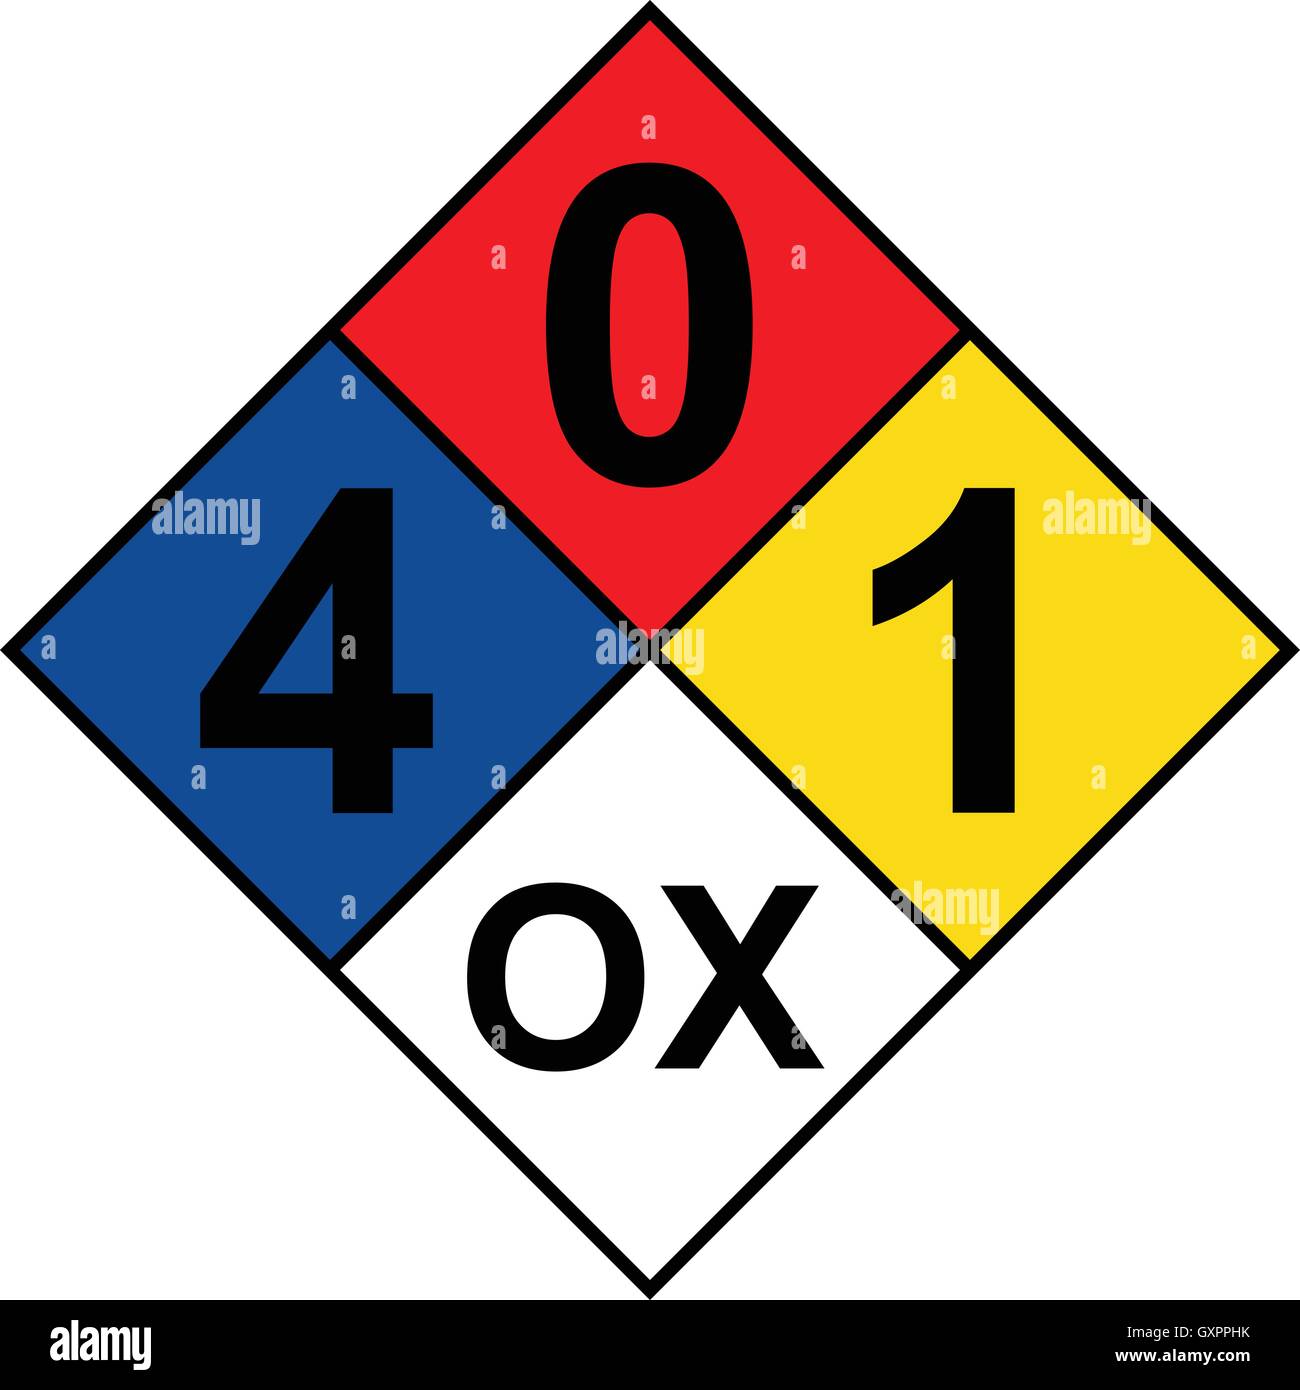 NFPA 704 diamond 401-OX sign, vector illustration. Stock Vector